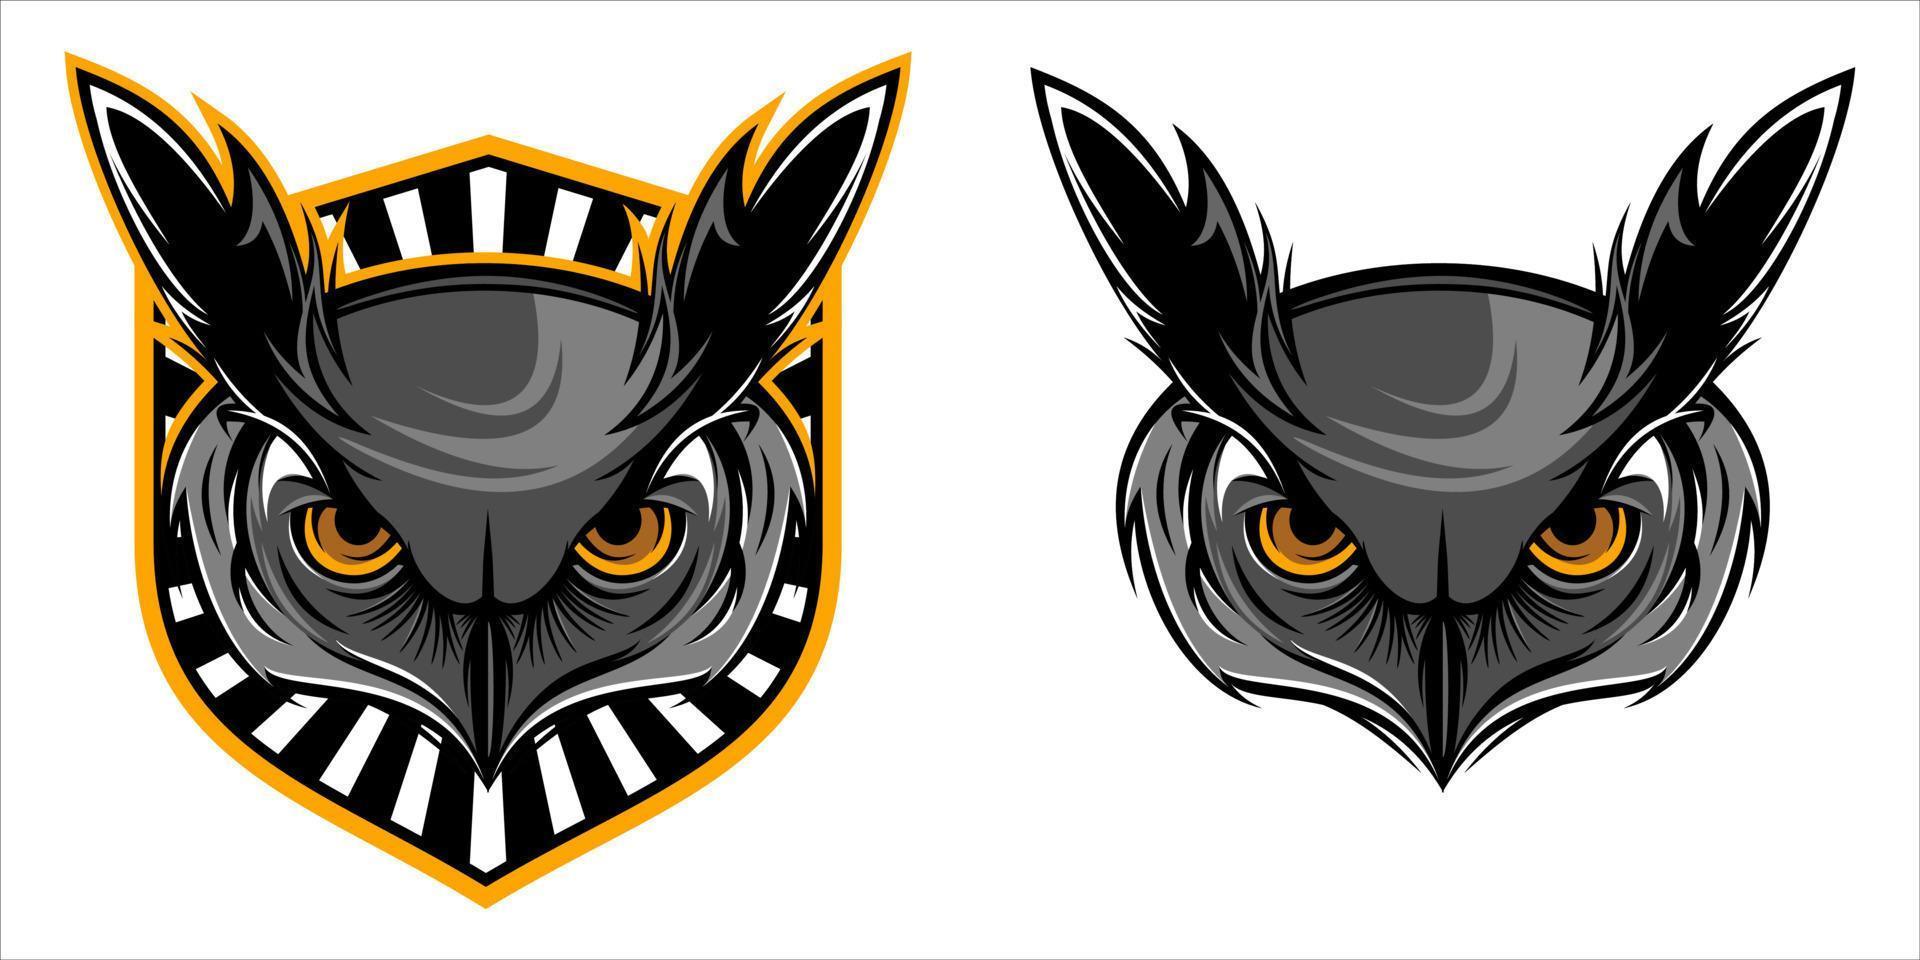 Owl mascot logo vector illustration